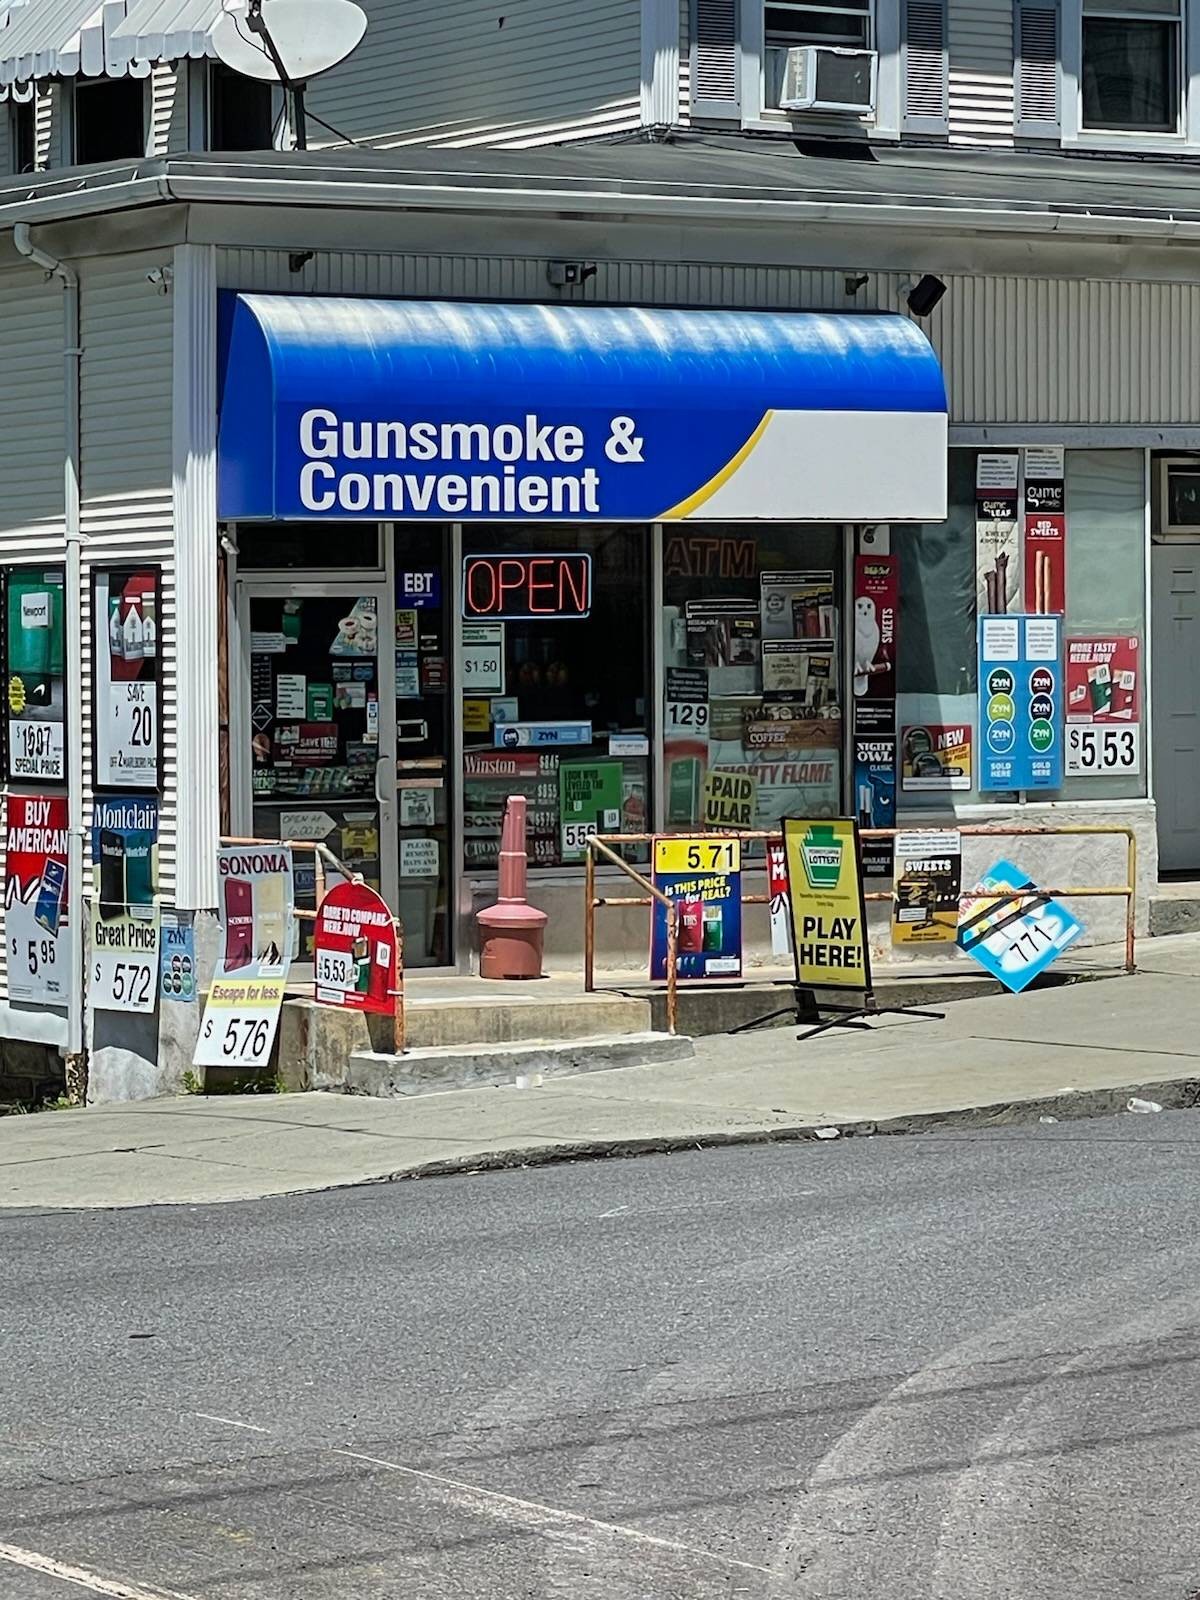 Gunsmoke & Convenient,1401 N Washington Ave, Scranton, PA 18509, United States